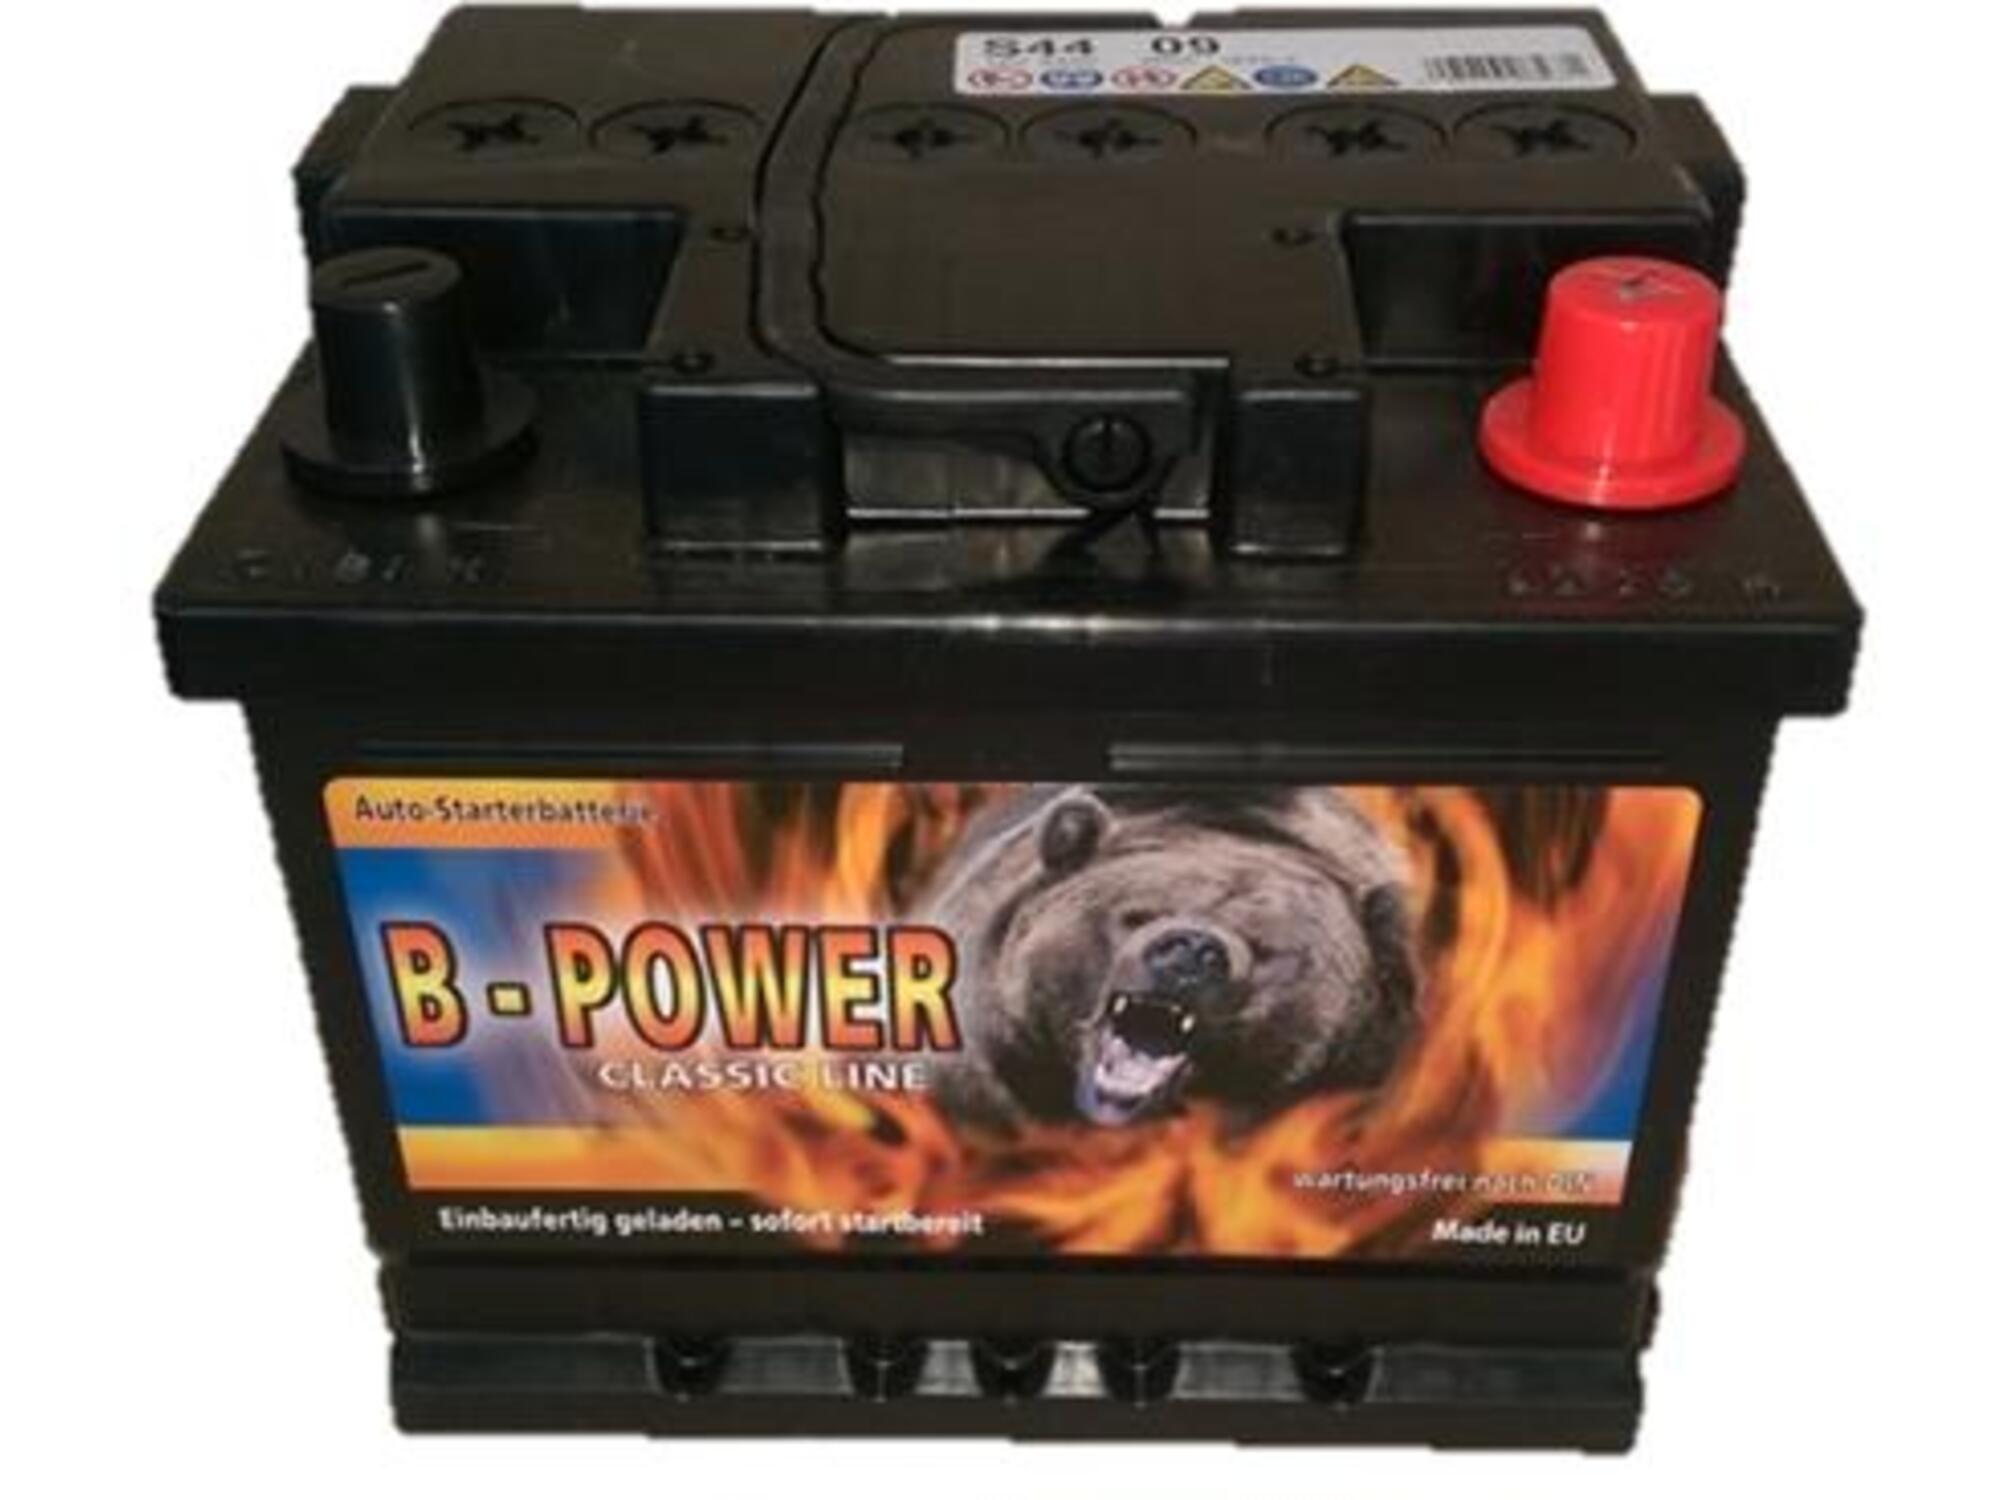 B-POWER akumulator 44ah (d+) -12v